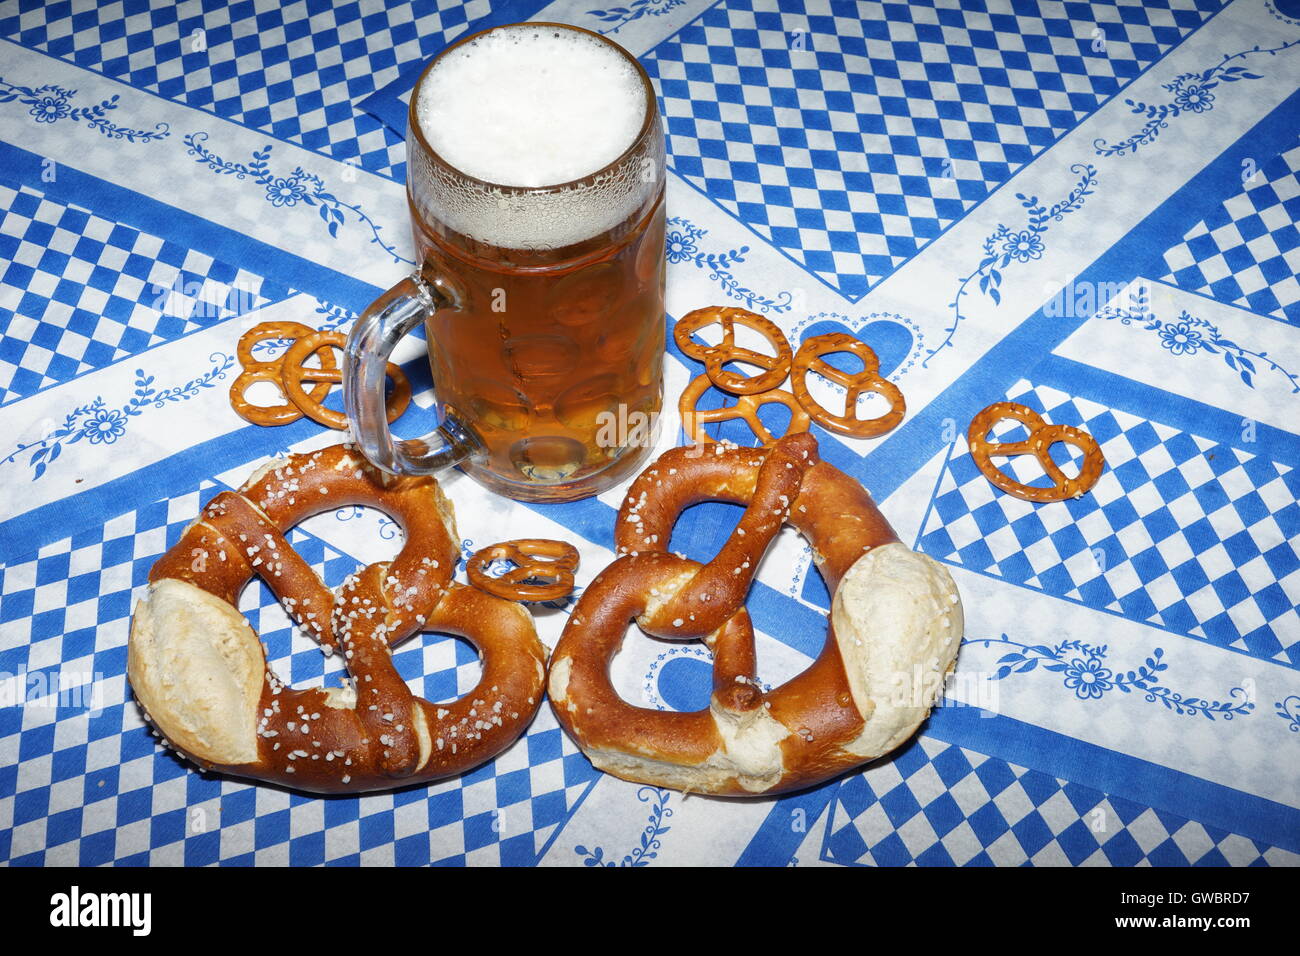 Bavarian meals for oktoberfest preparing on the bavarian national colours background Stock Photo